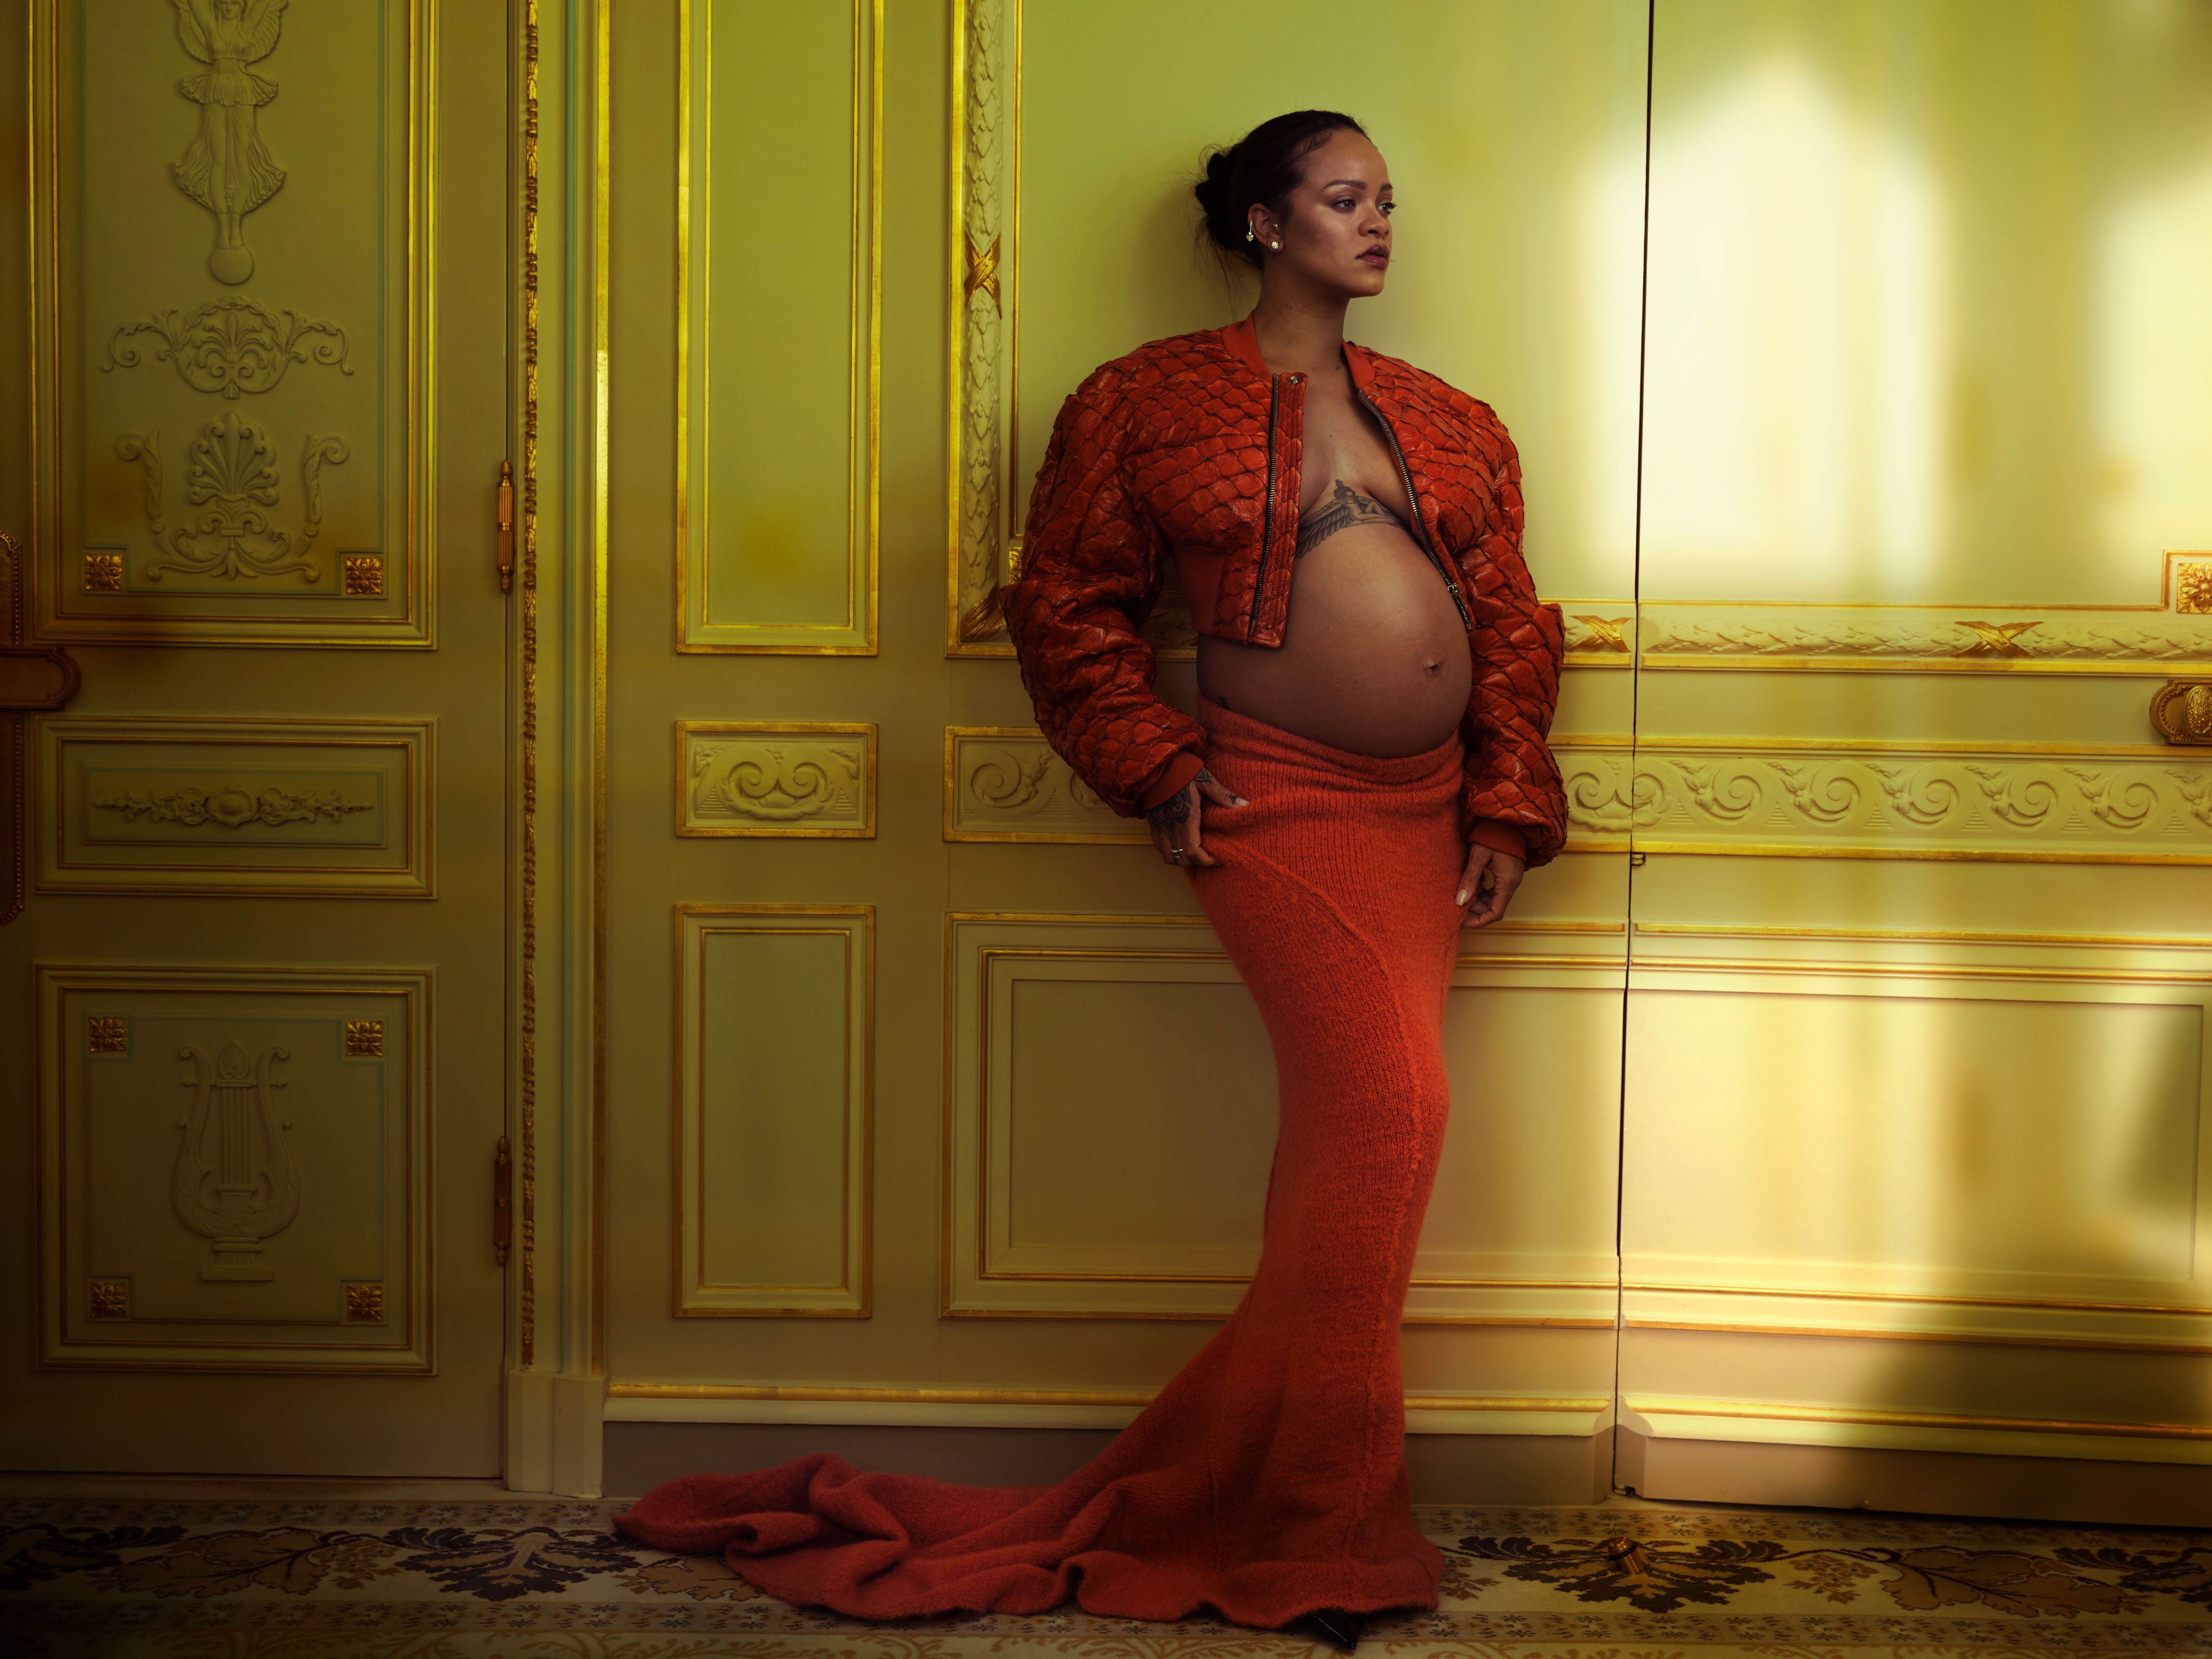 Rihanna shows off baby bump in new Louis Vuitton campaign - KESQ